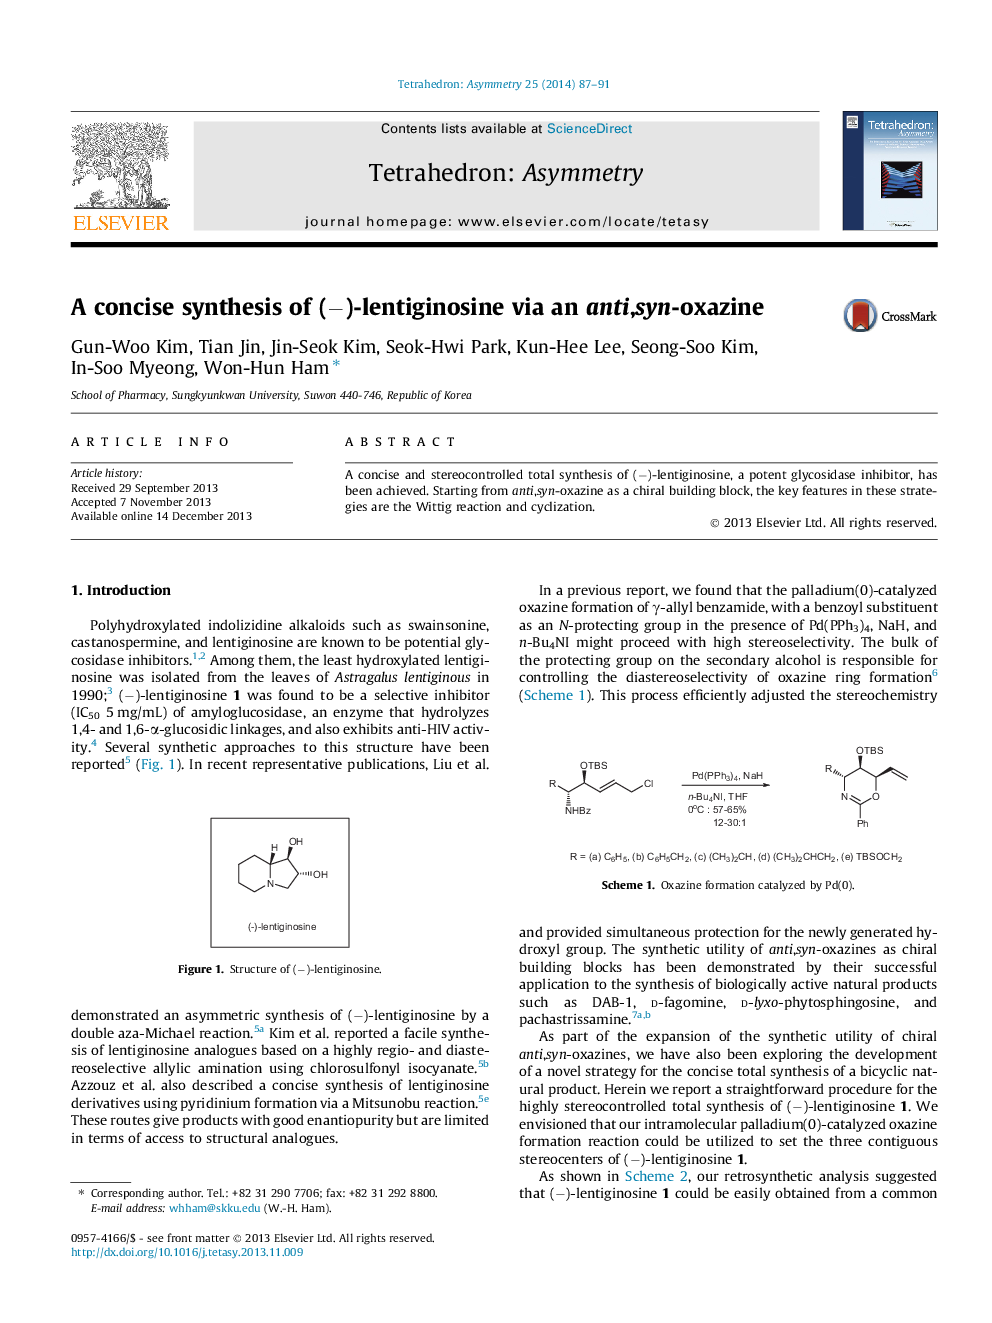 A concise synthesis of (−)-lentiginosine via an anti,syn-oxazine